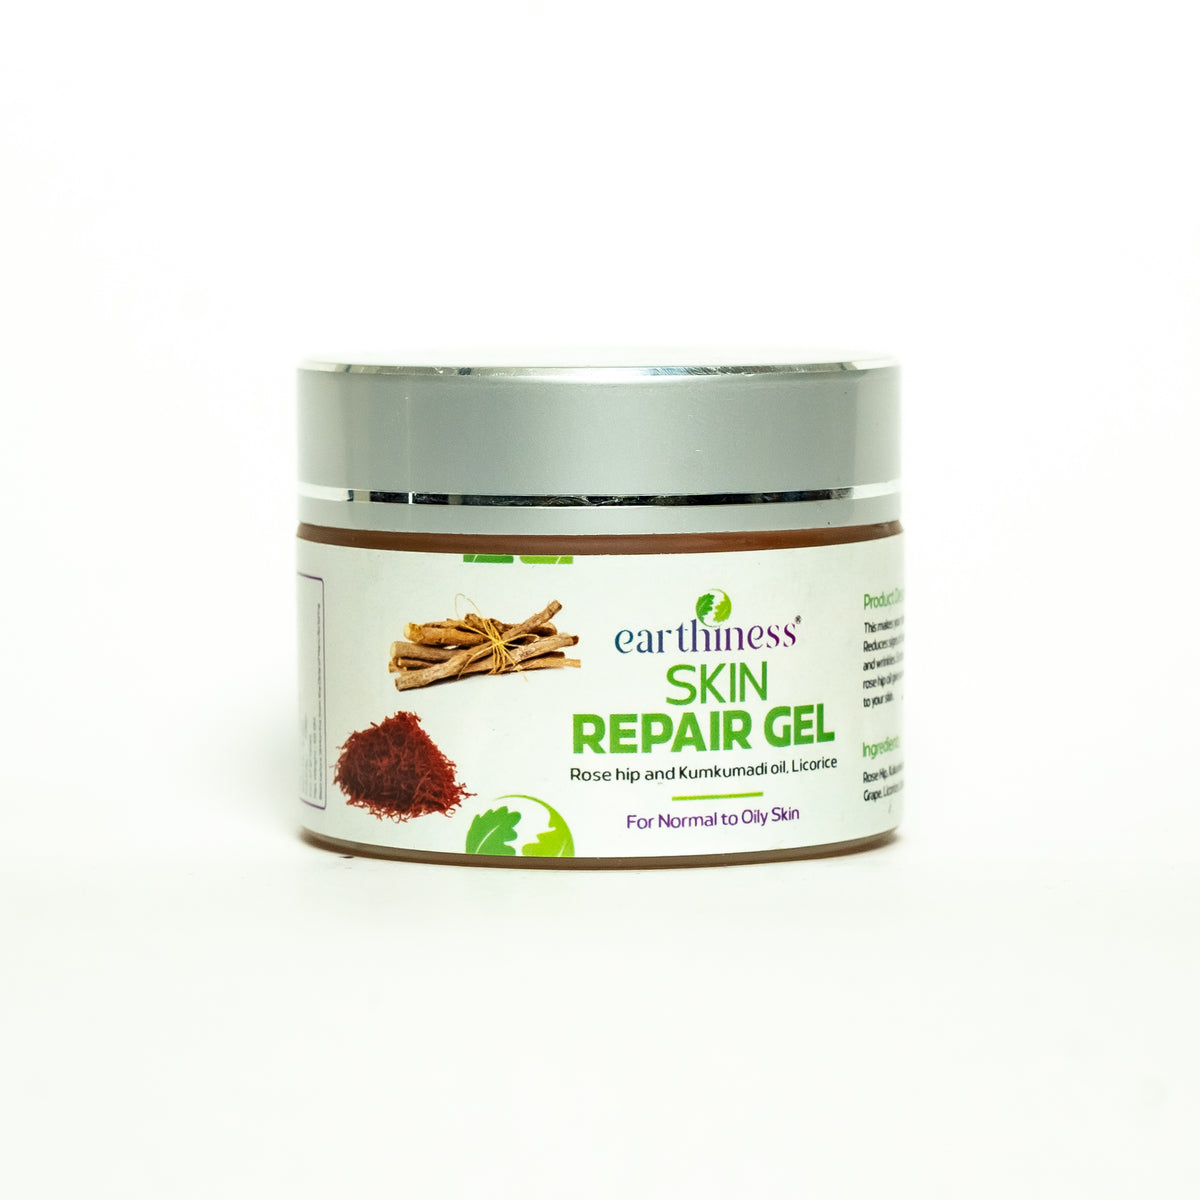 Organic Skin Repair Gel with Lotus & Licorice To Reduce Fine Lines & Wrinkles